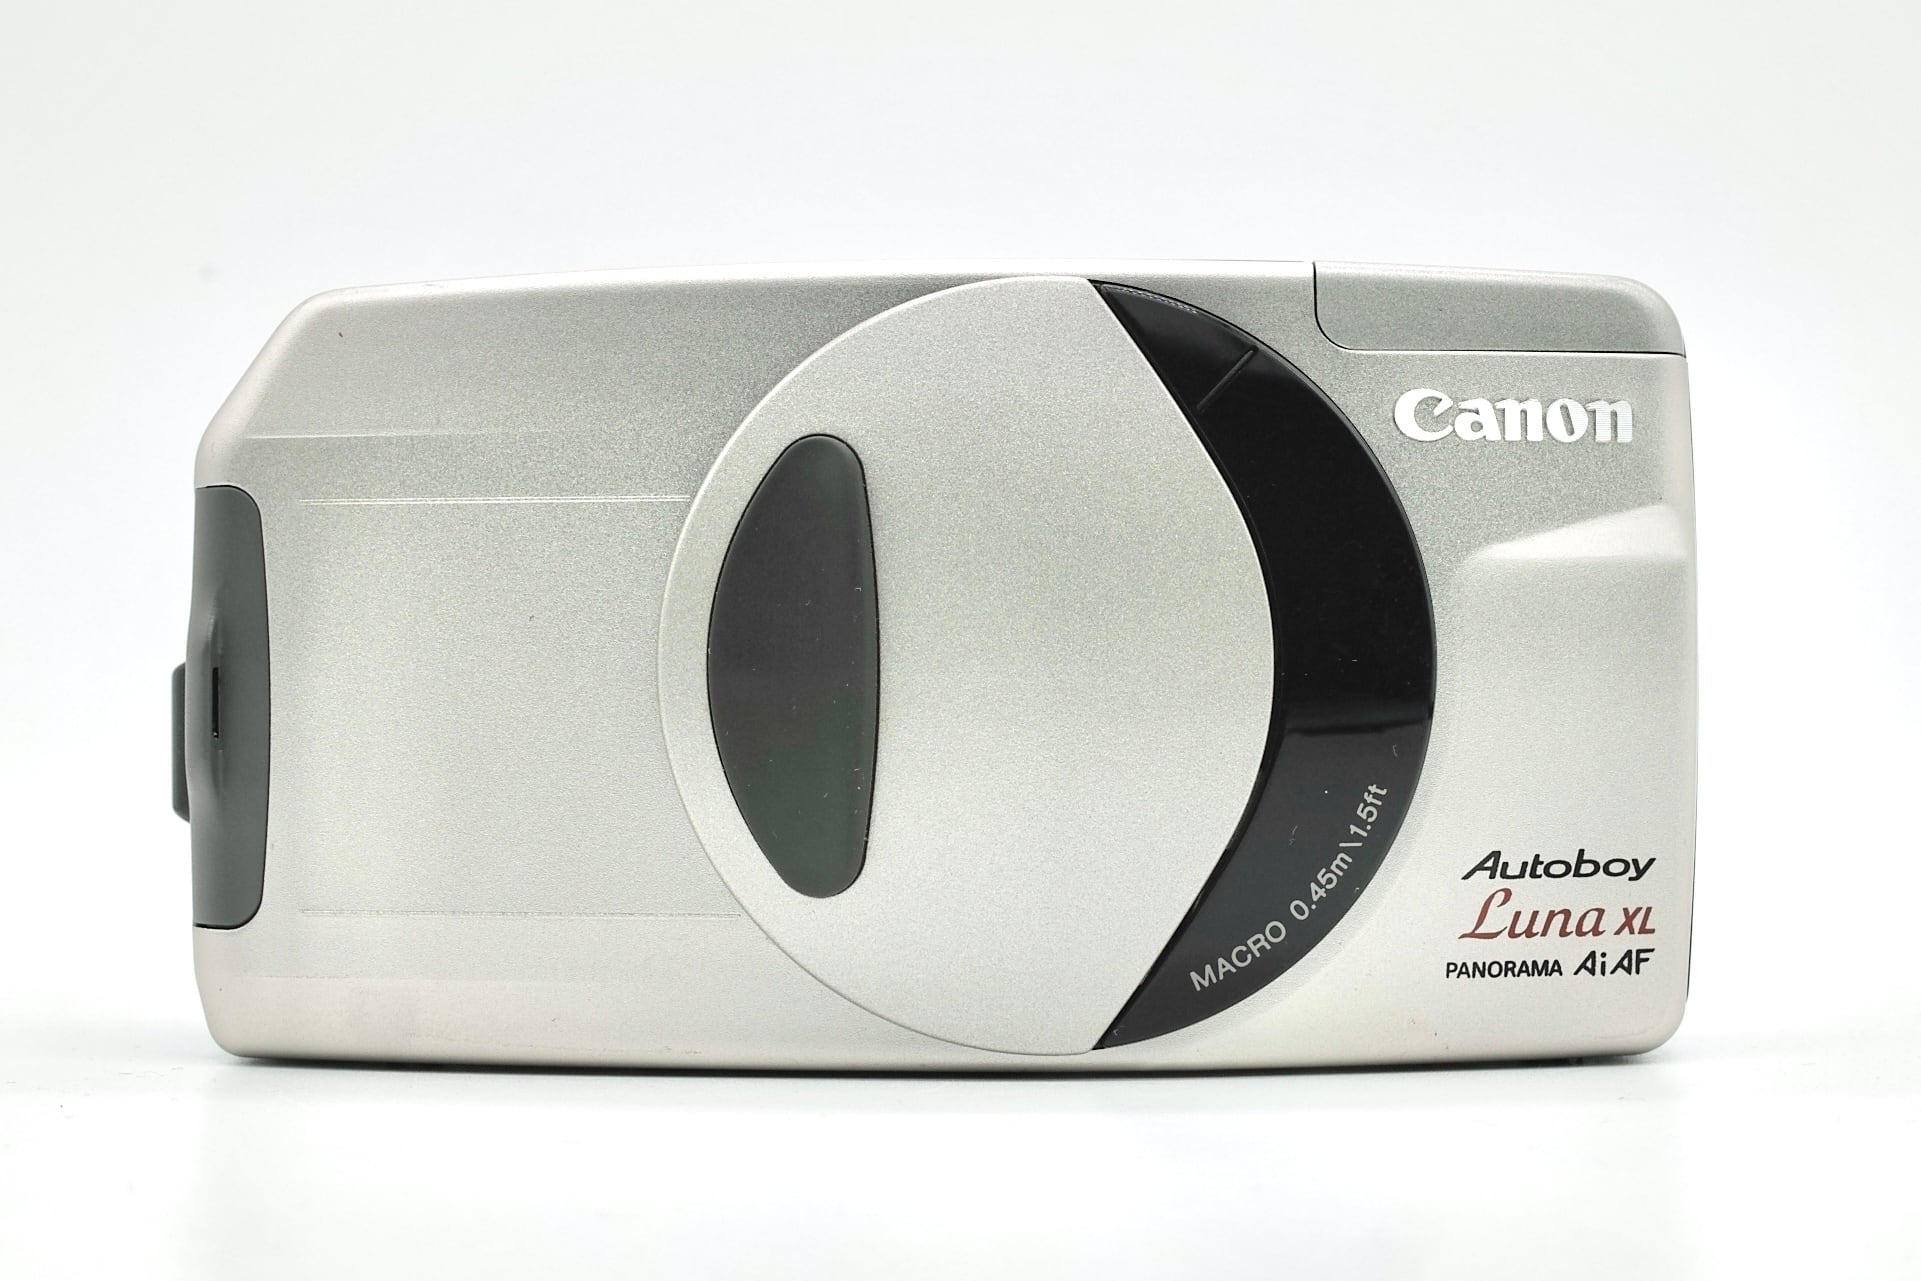 Canon キャノン Autoboy Luna XL